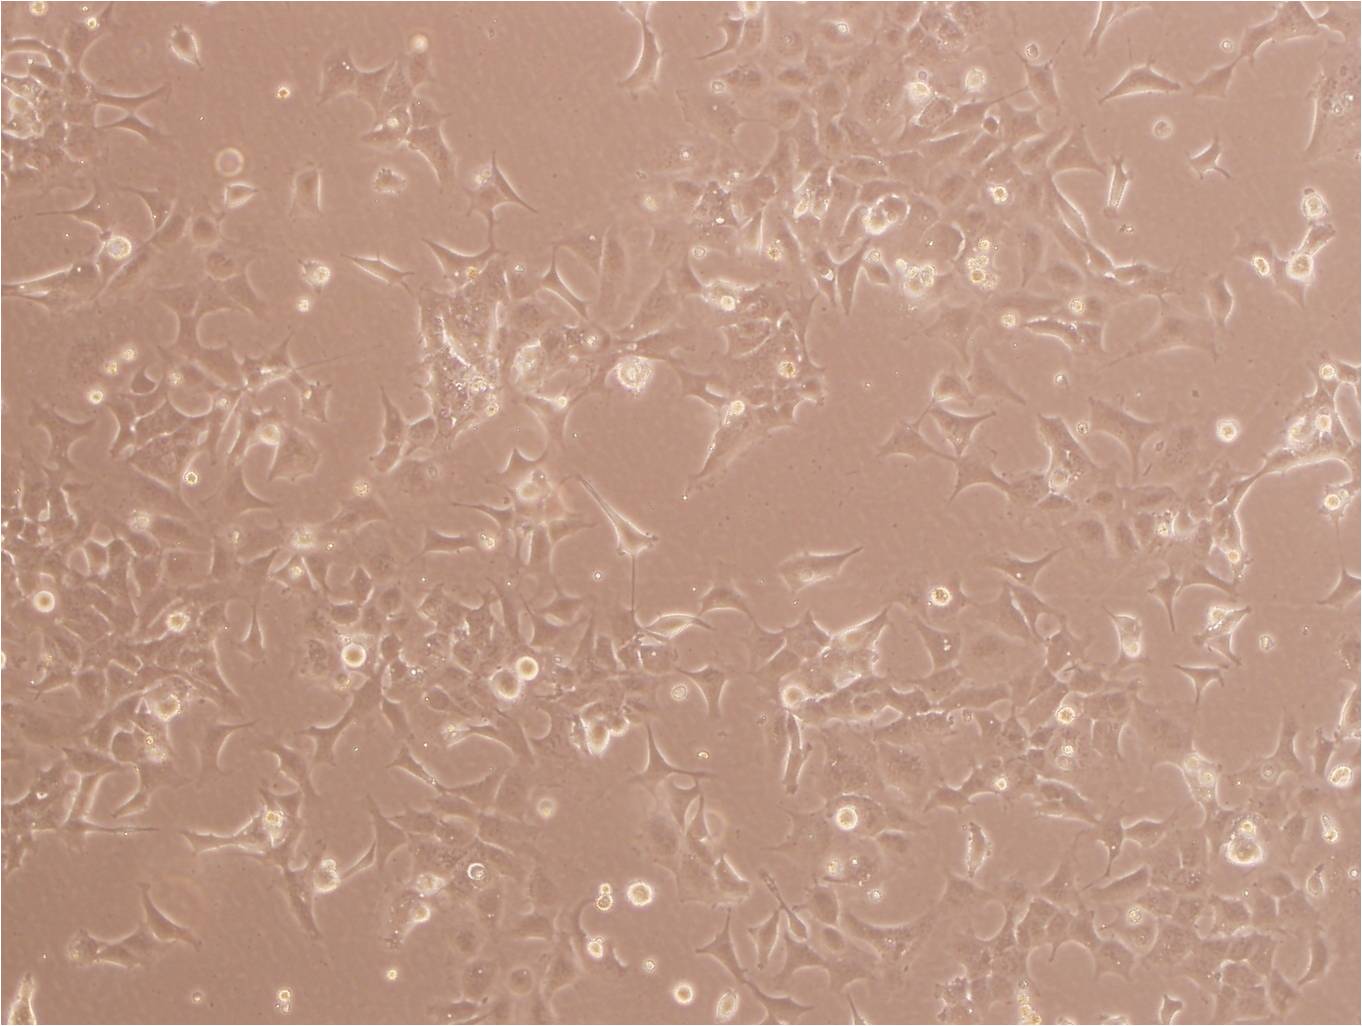 Tca8113 Cell|人舌鳞癌细胞